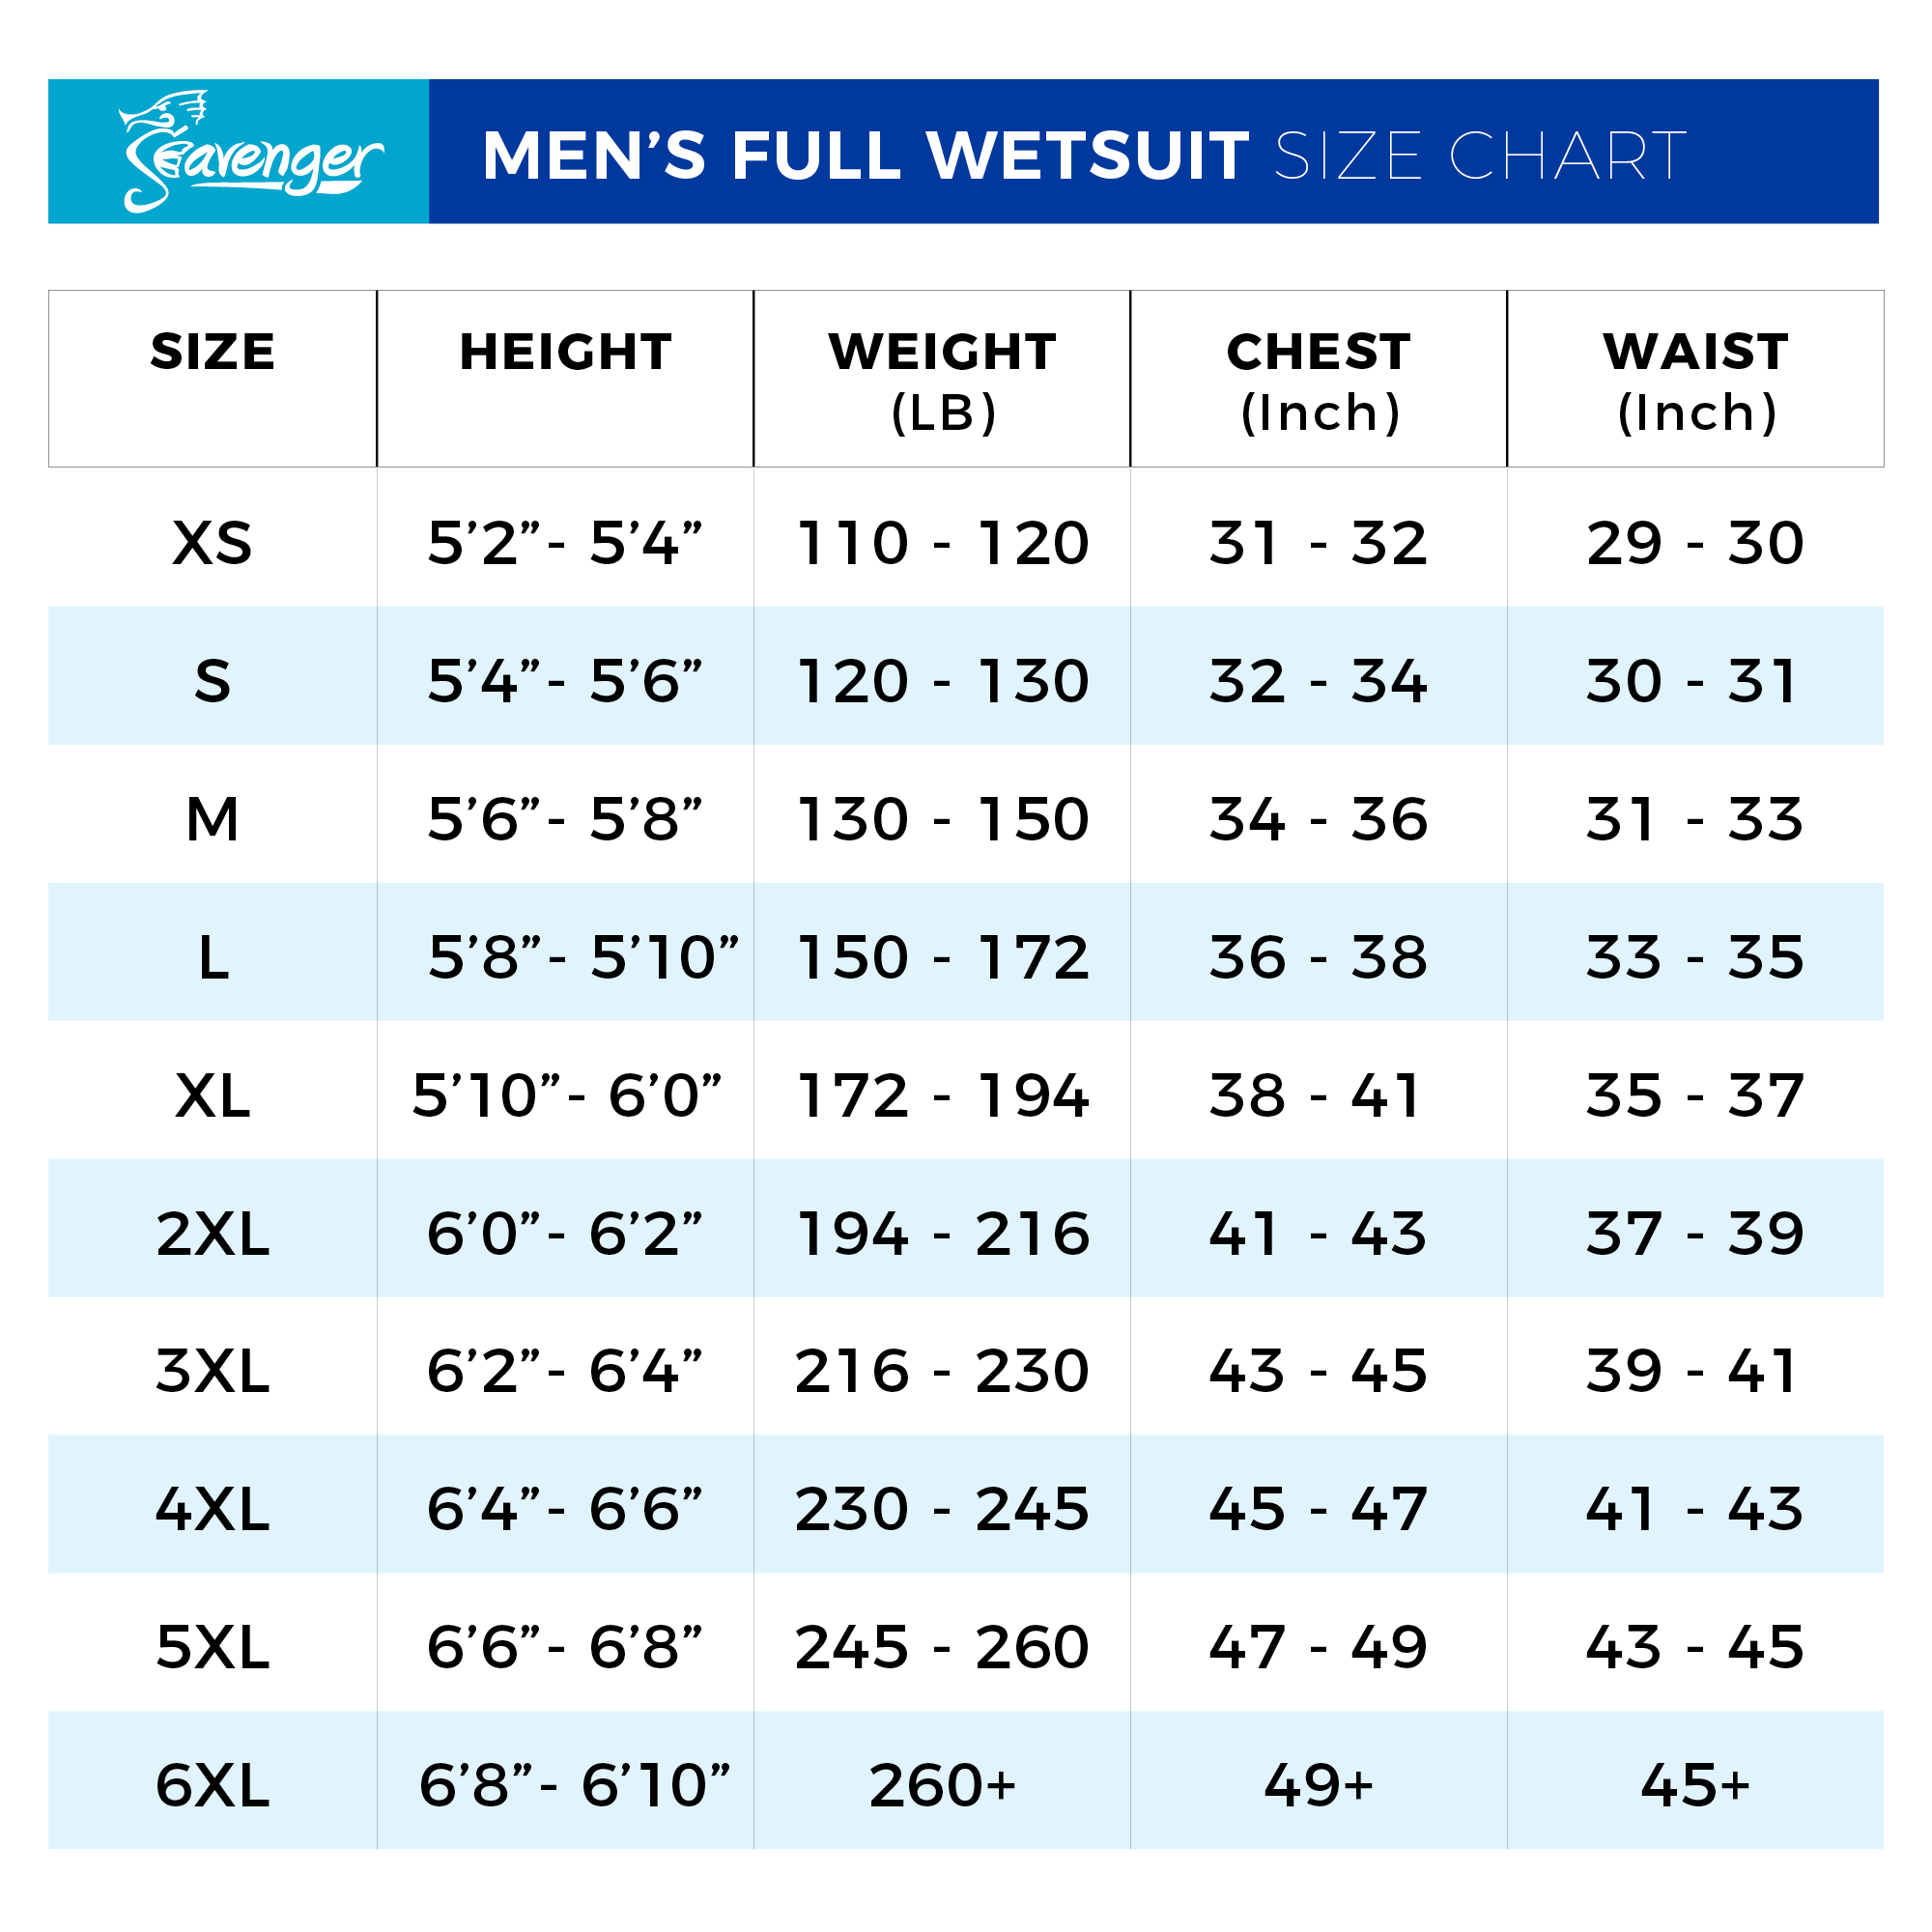 Seavenger Men's Wetsuit Size Chart